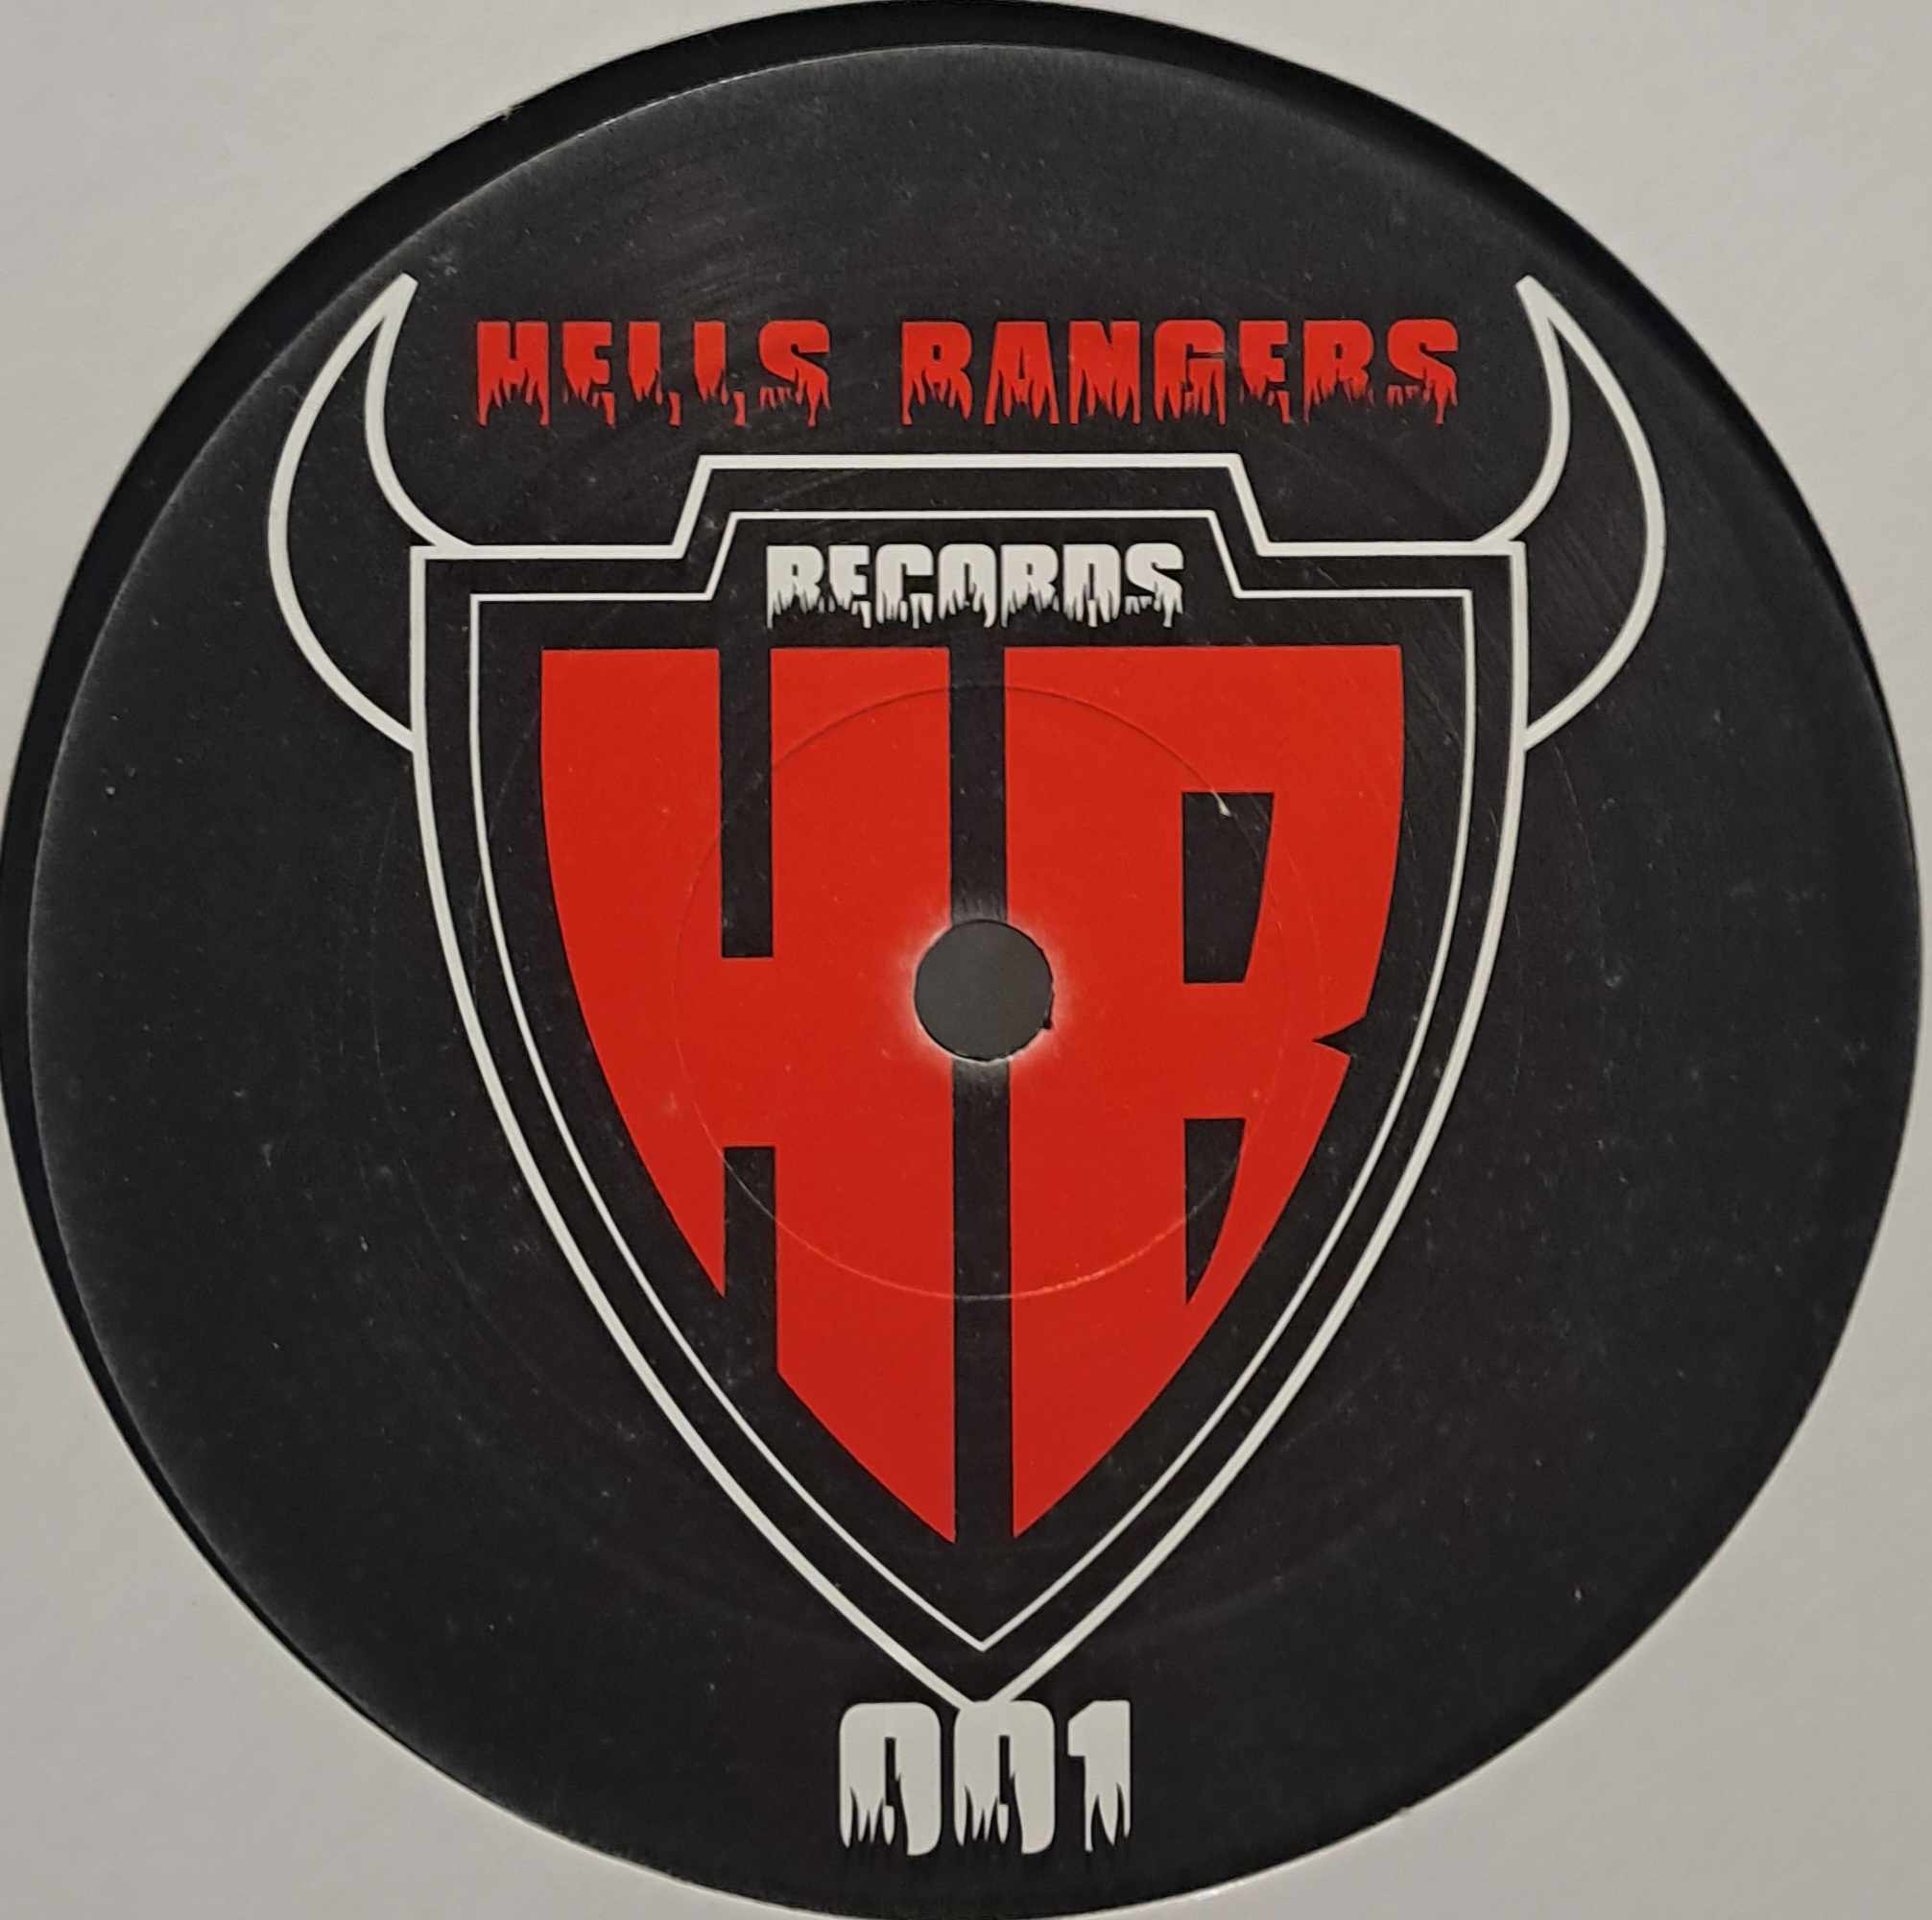 Hells Bangers Records 001 - vinyle gabber